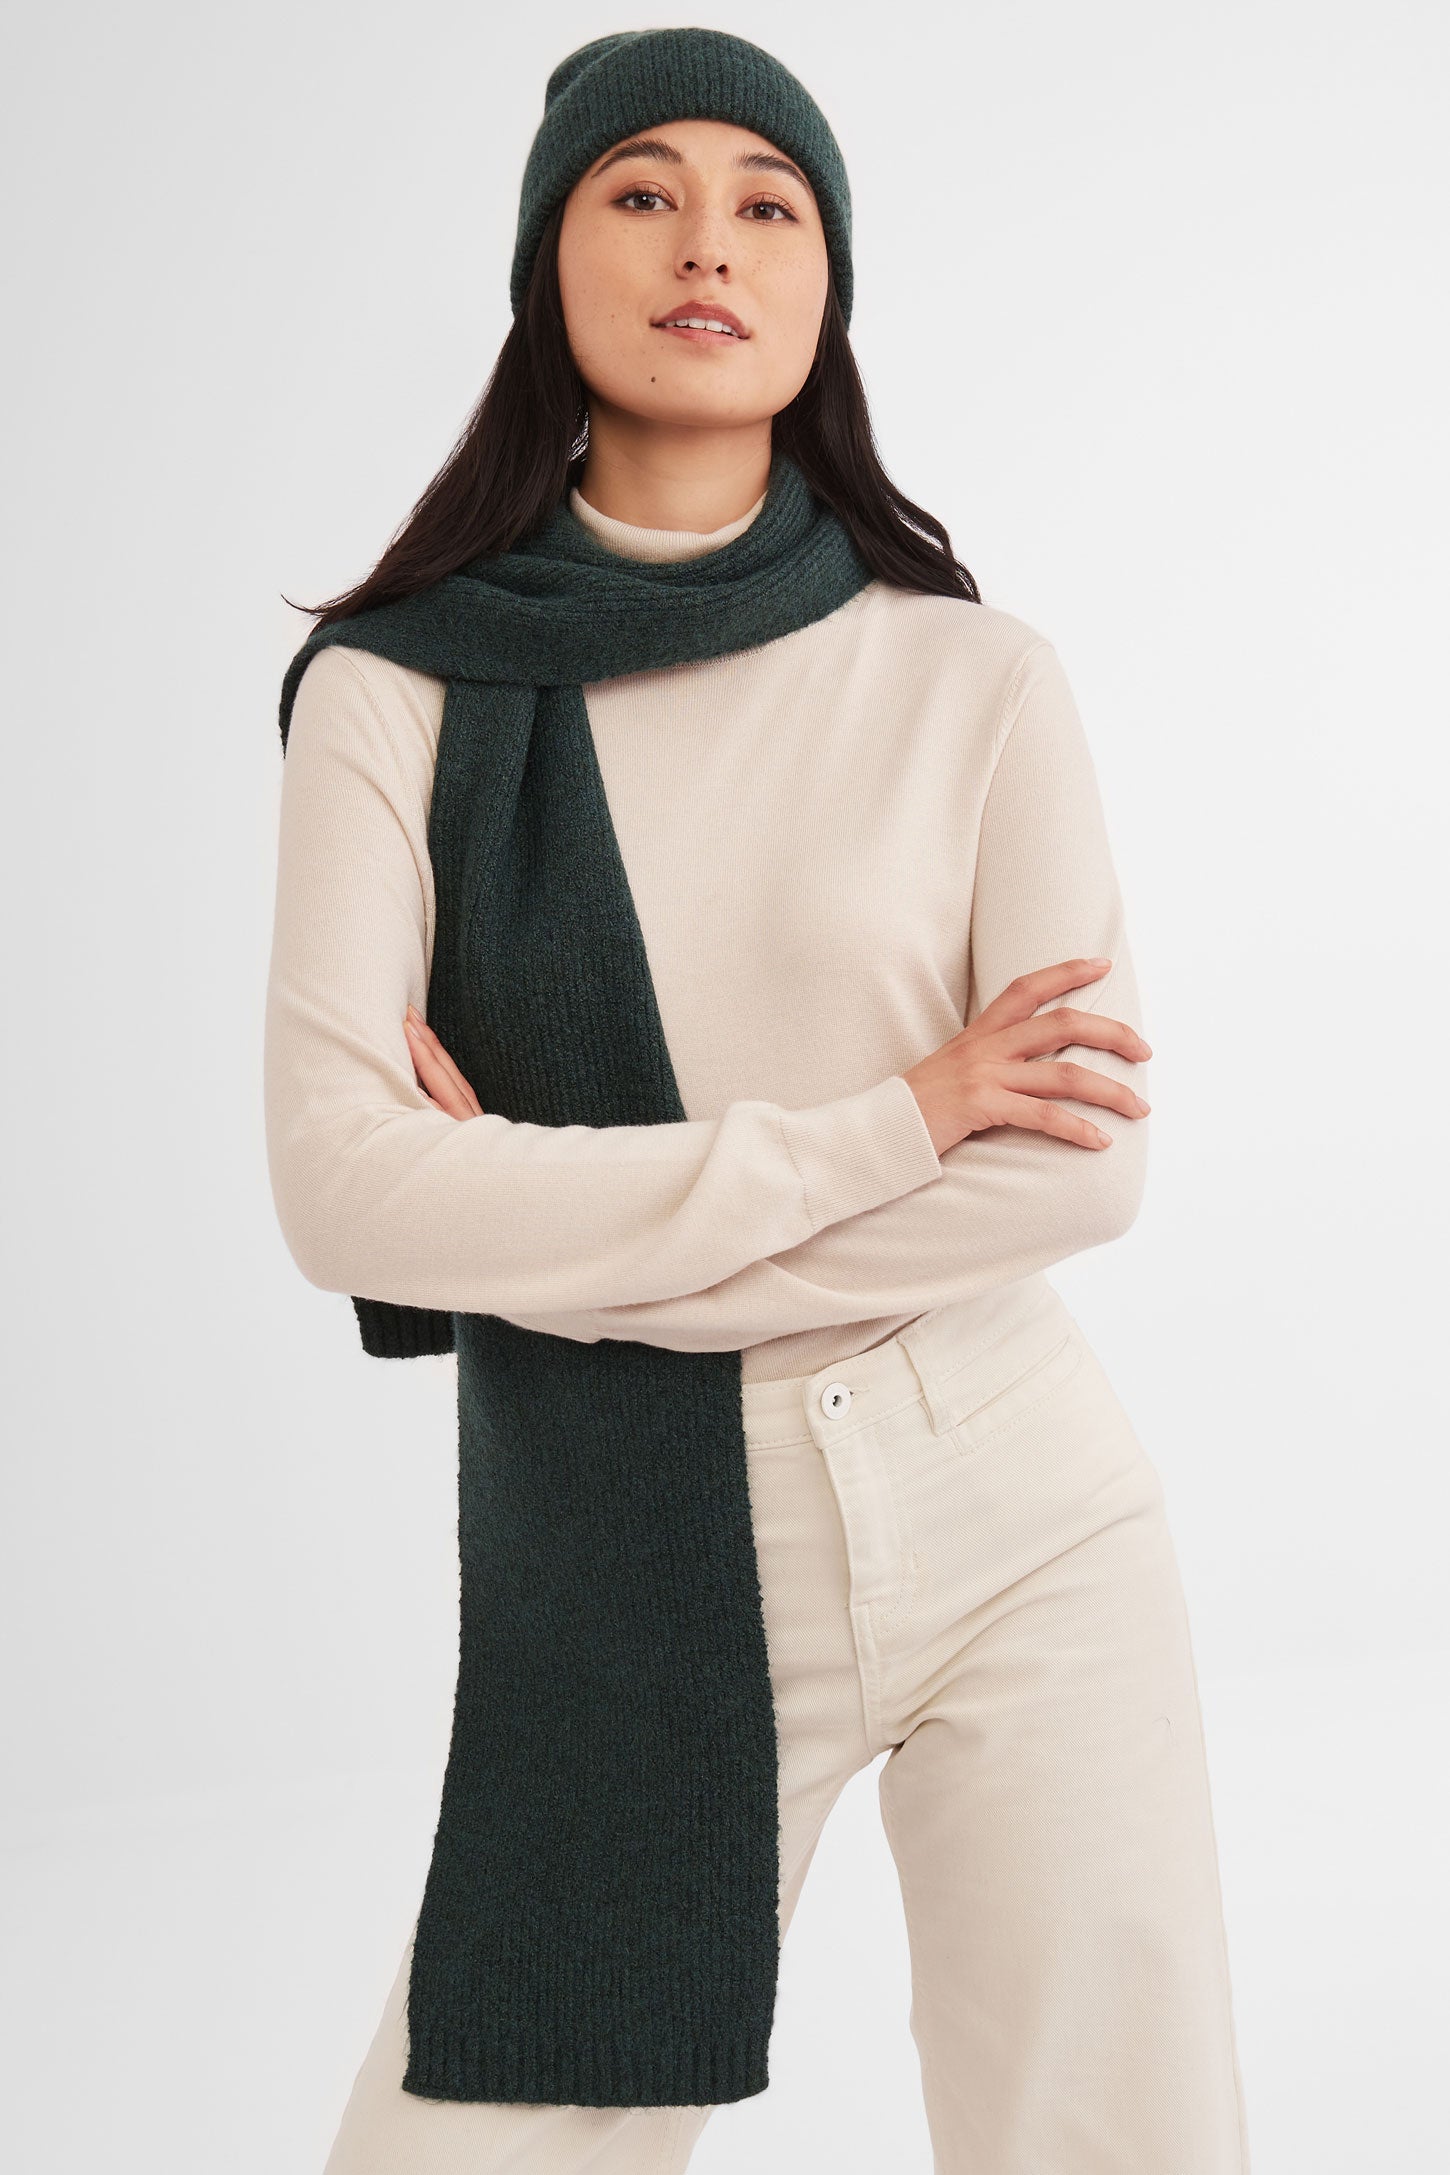 Foulard en tricot, polyester recyclé - Femme && KAKI